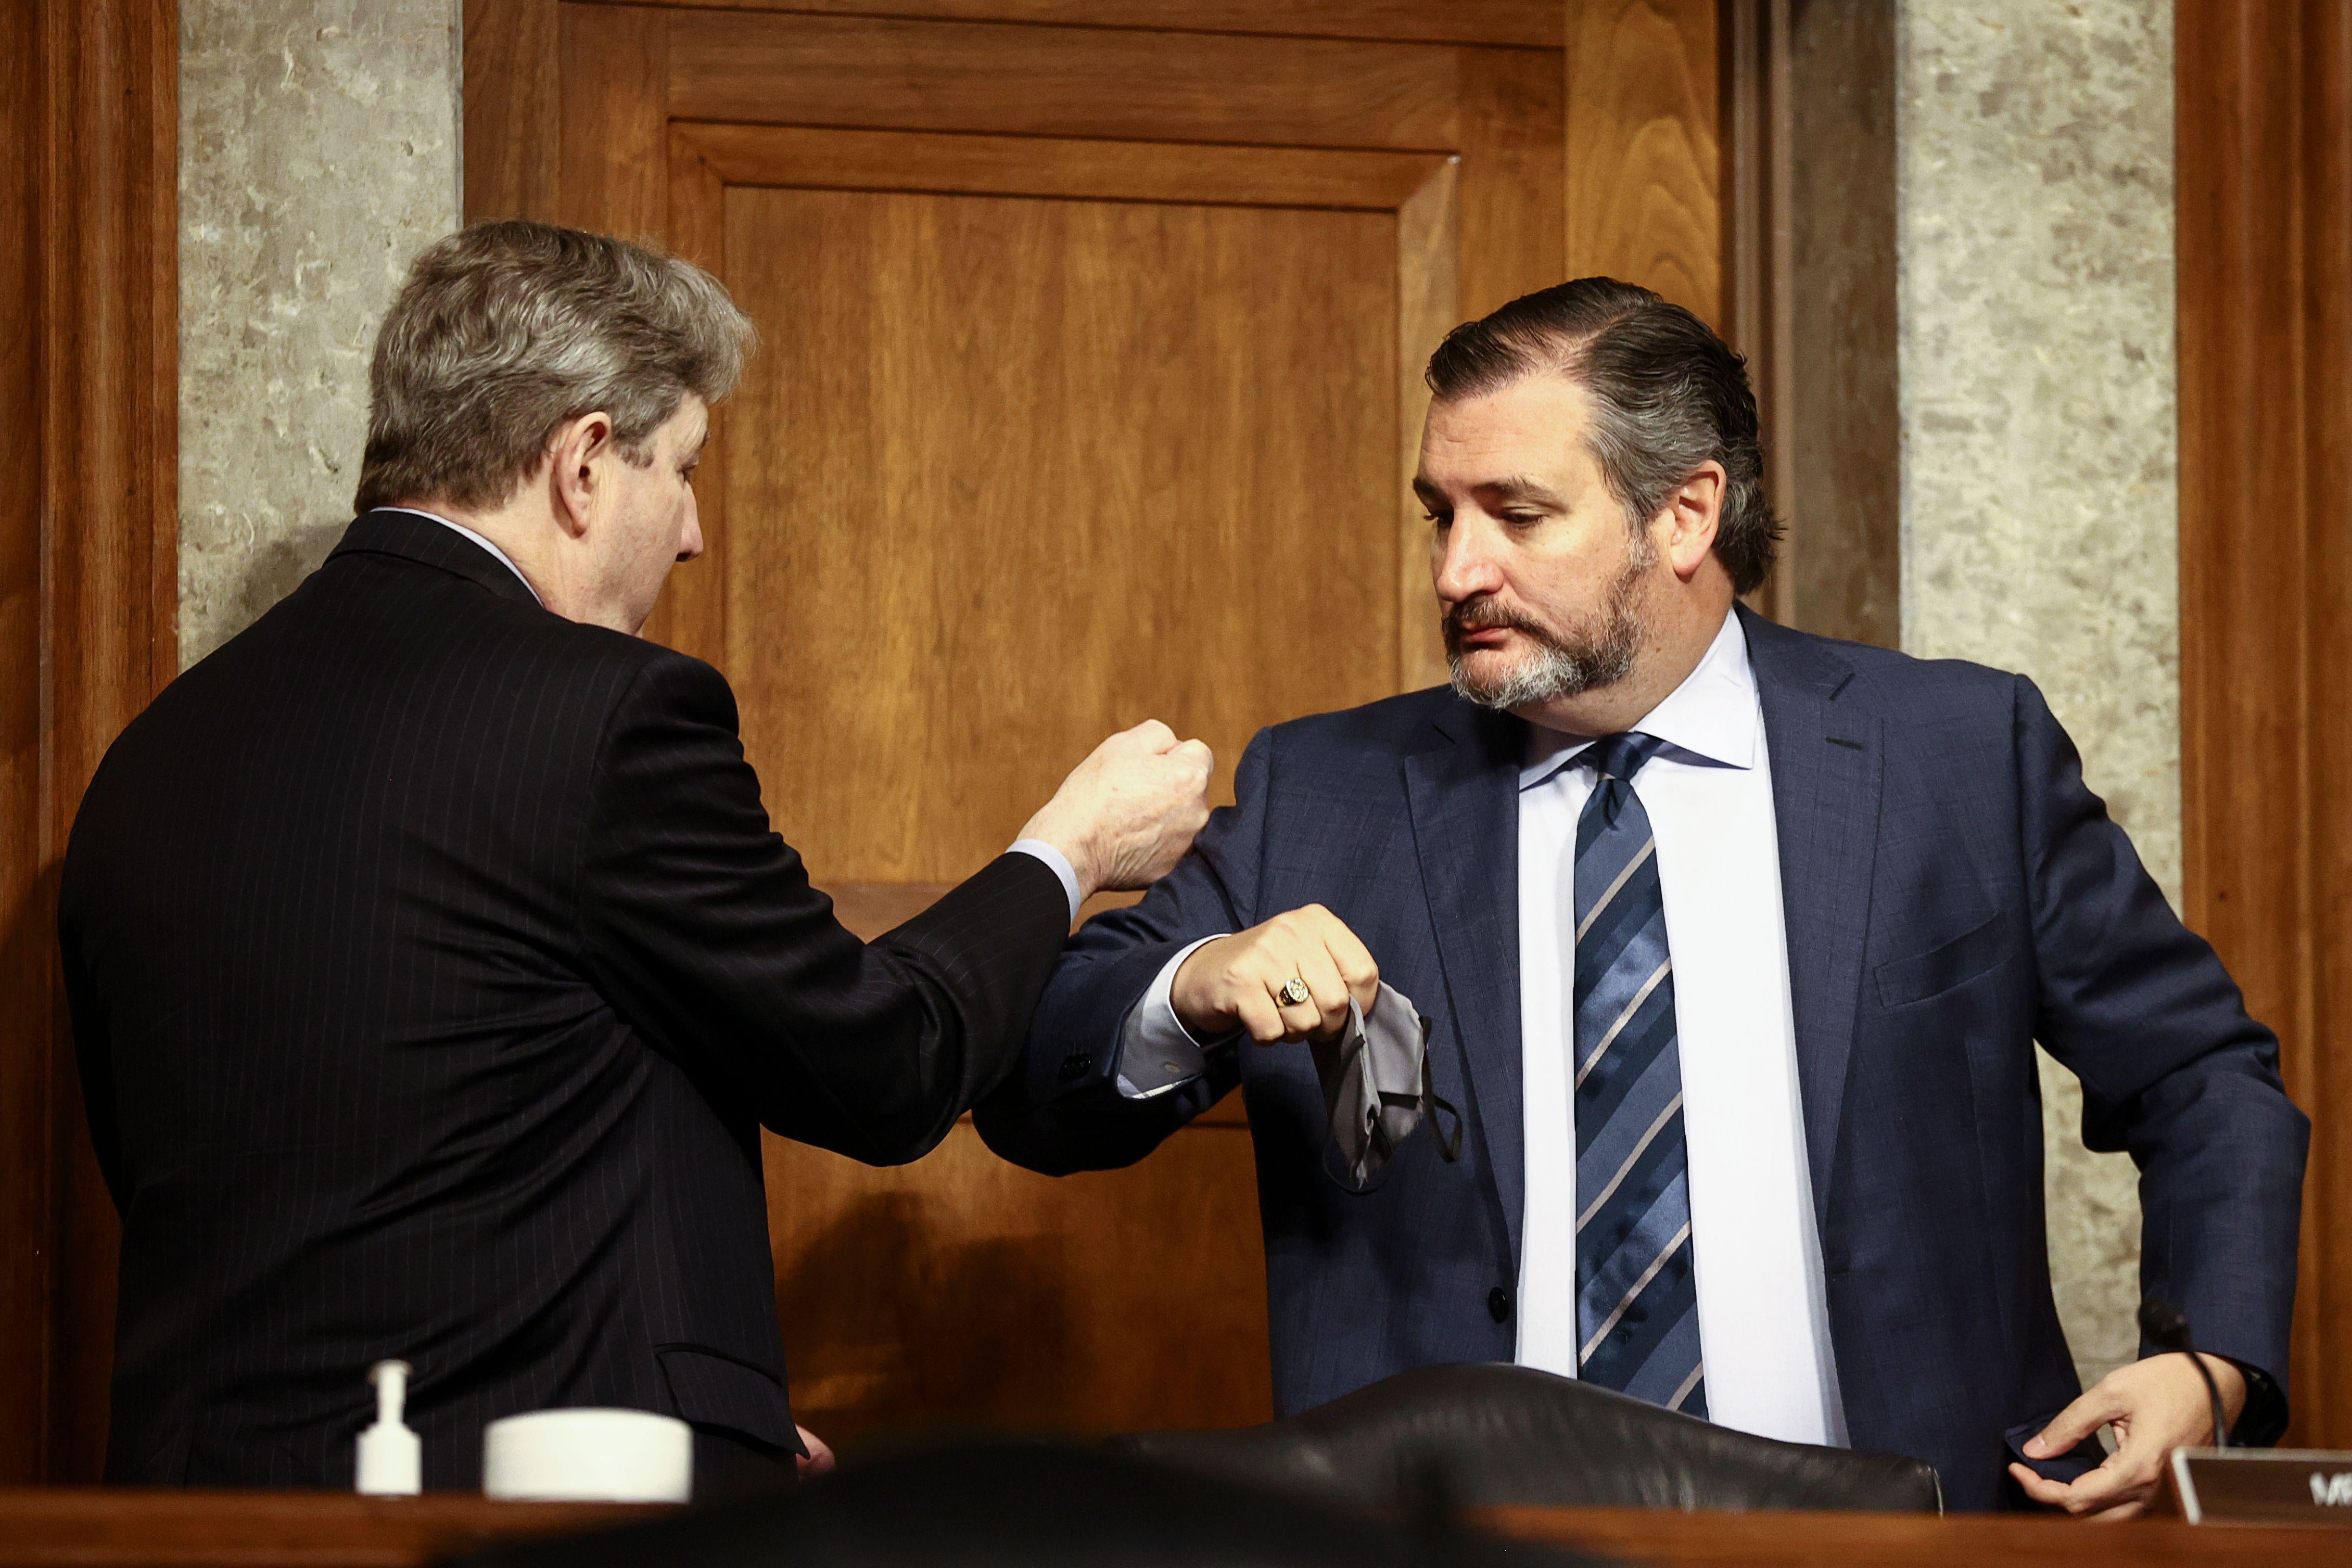 Senator John Kennedy (R-LA) and Senator Ted Cruz (R-TX) share an elbow bump greeting at a Senate Judiciary Committee hearing on Capitol Hill in Washington, D.C. on November 17, 2020.